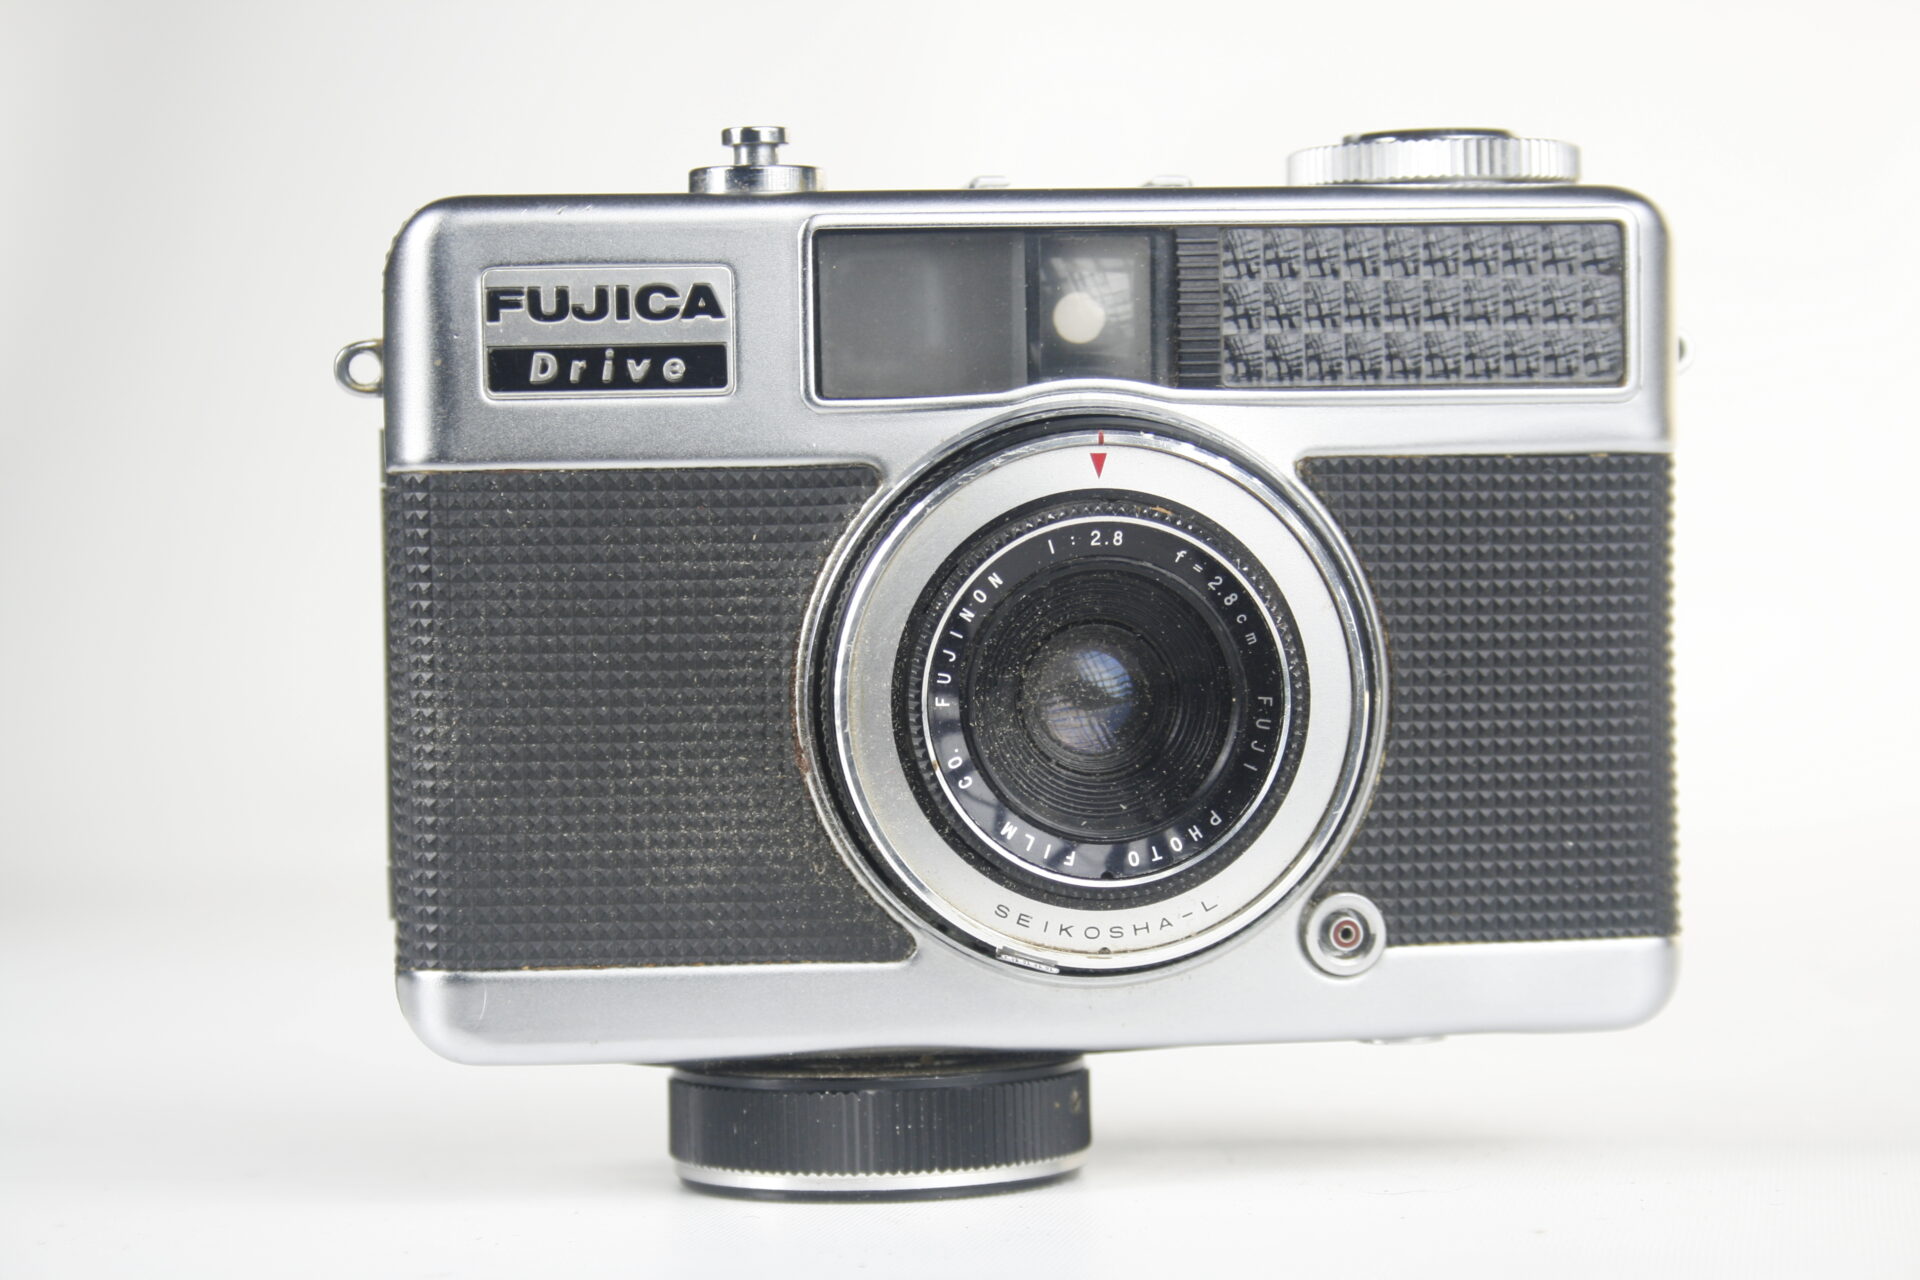 Fuji Fujica Drive half-frame viewfinder camera. 35mm film. 1964. Japan.